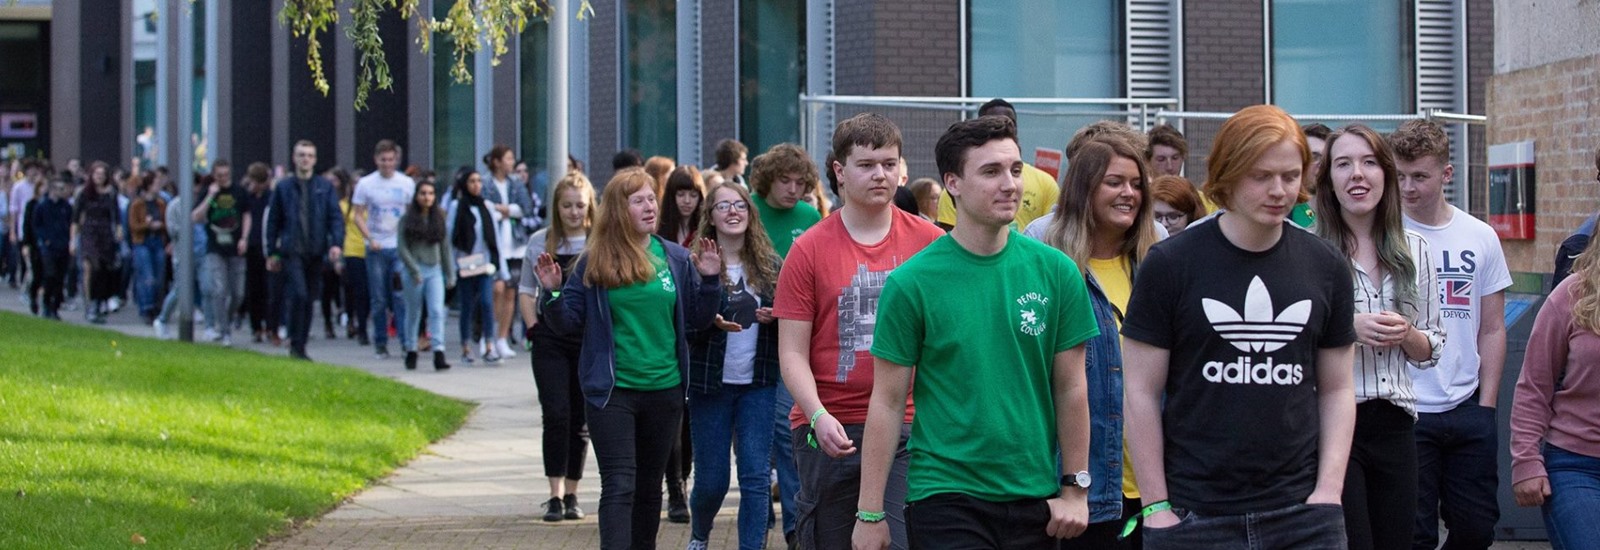 Students walking through Lancaster University